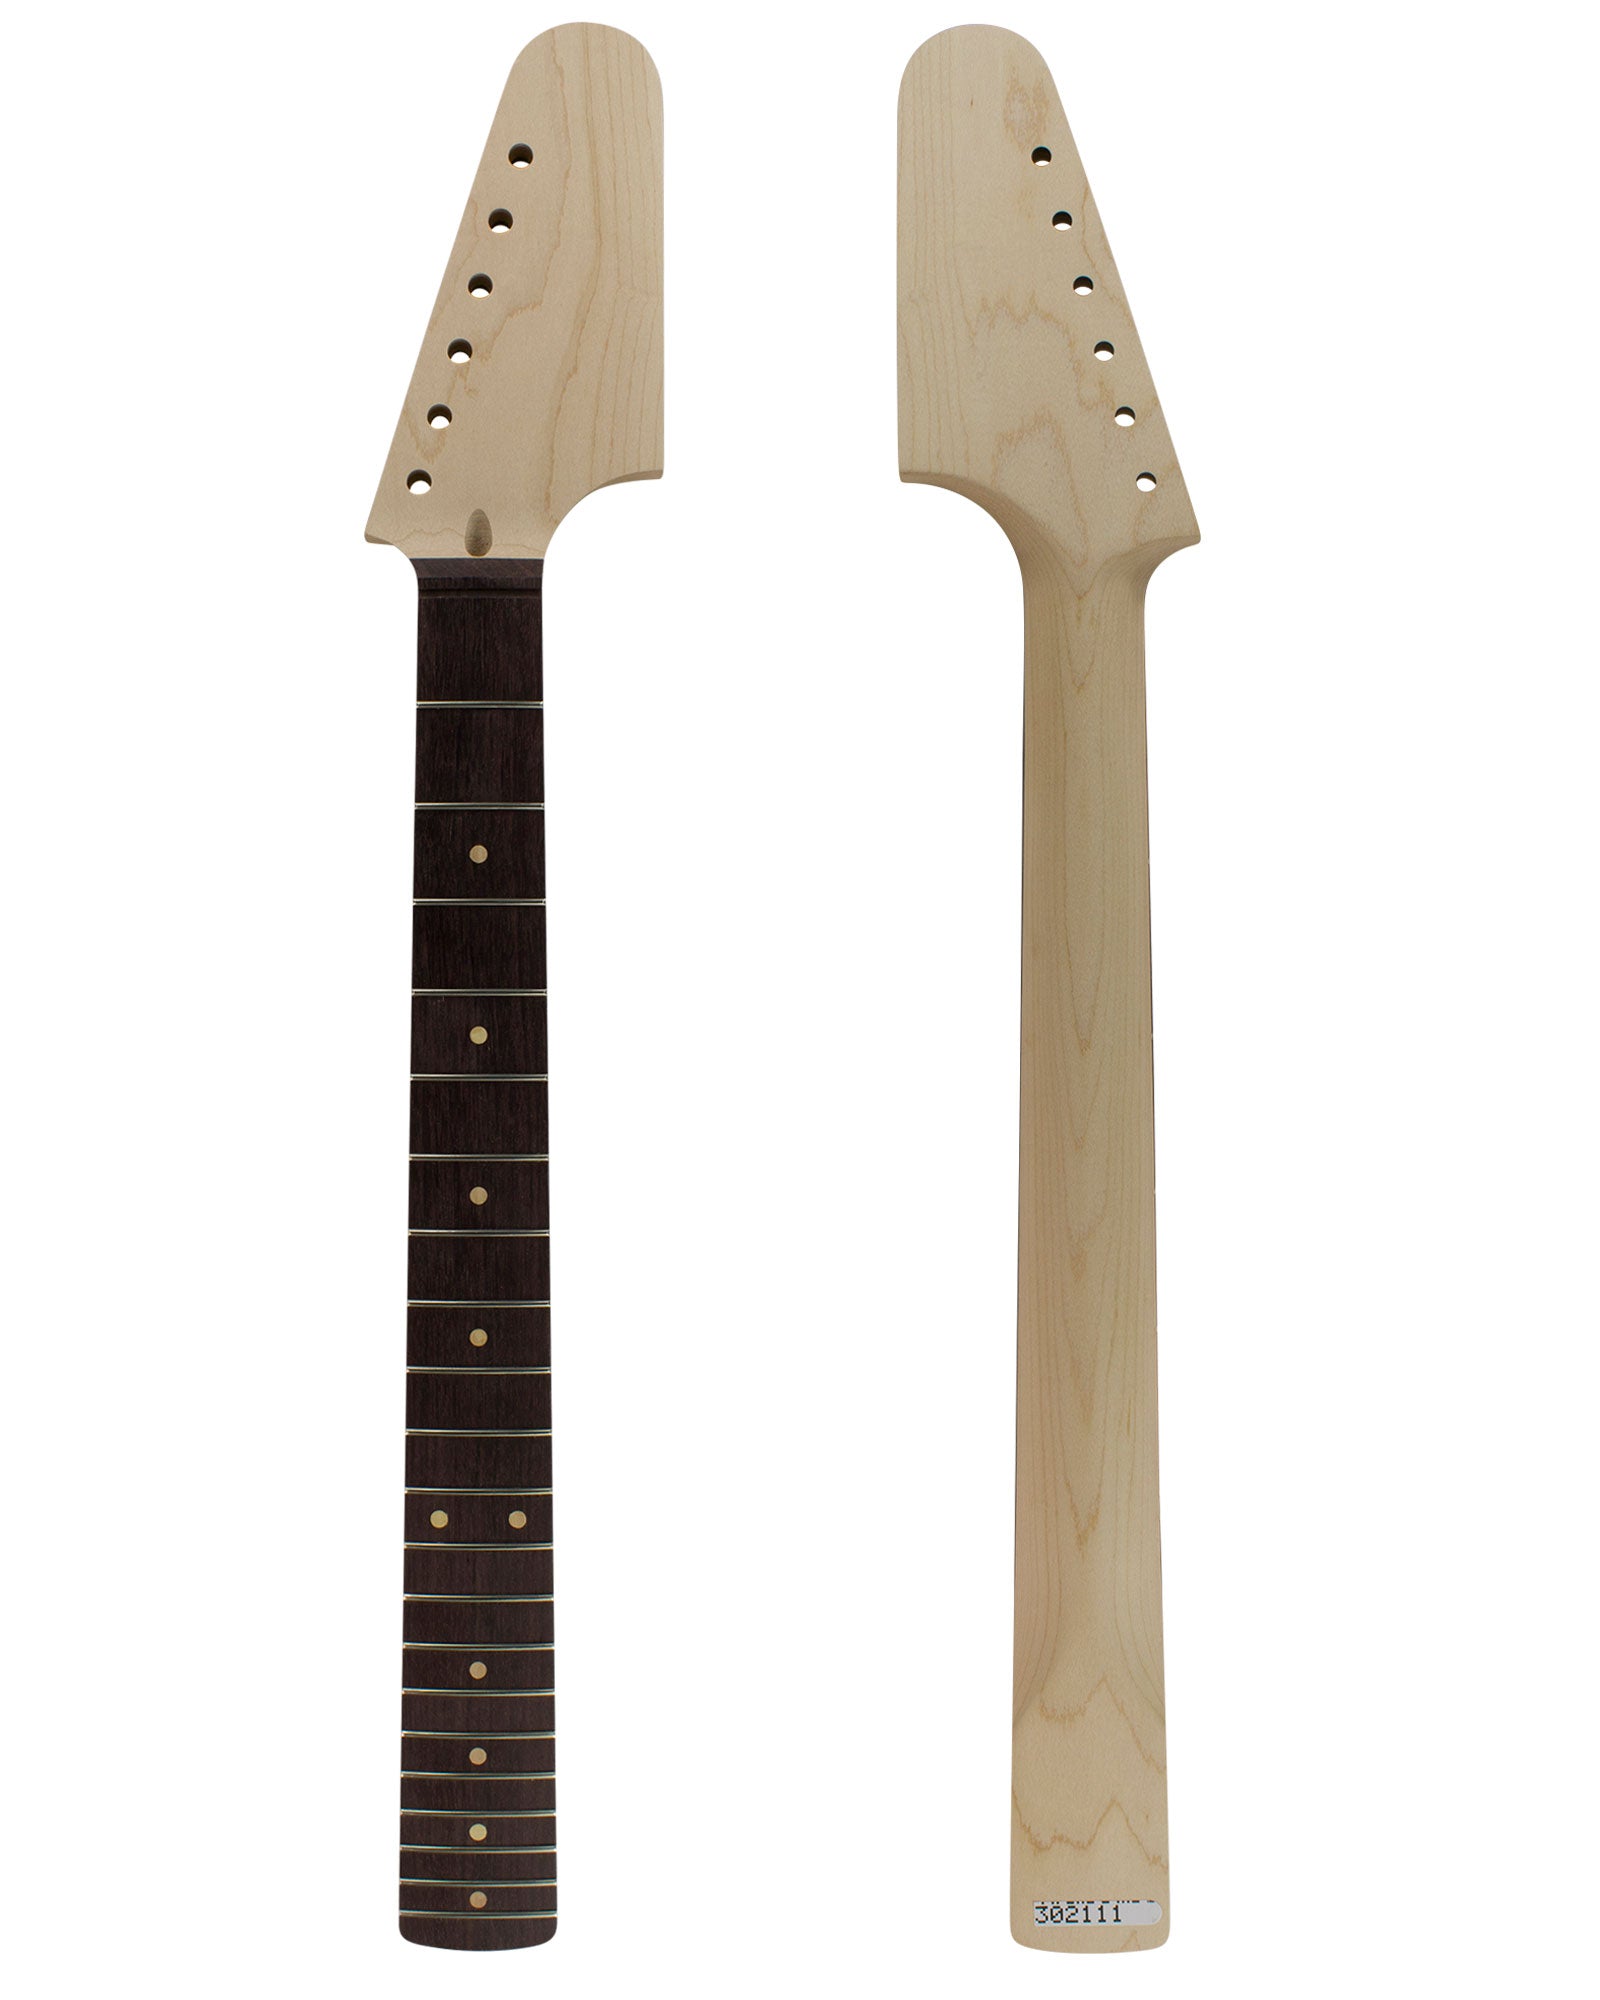 SC Guitar Neck 302111-Guitar Neck - In Stock-Guitarbuild